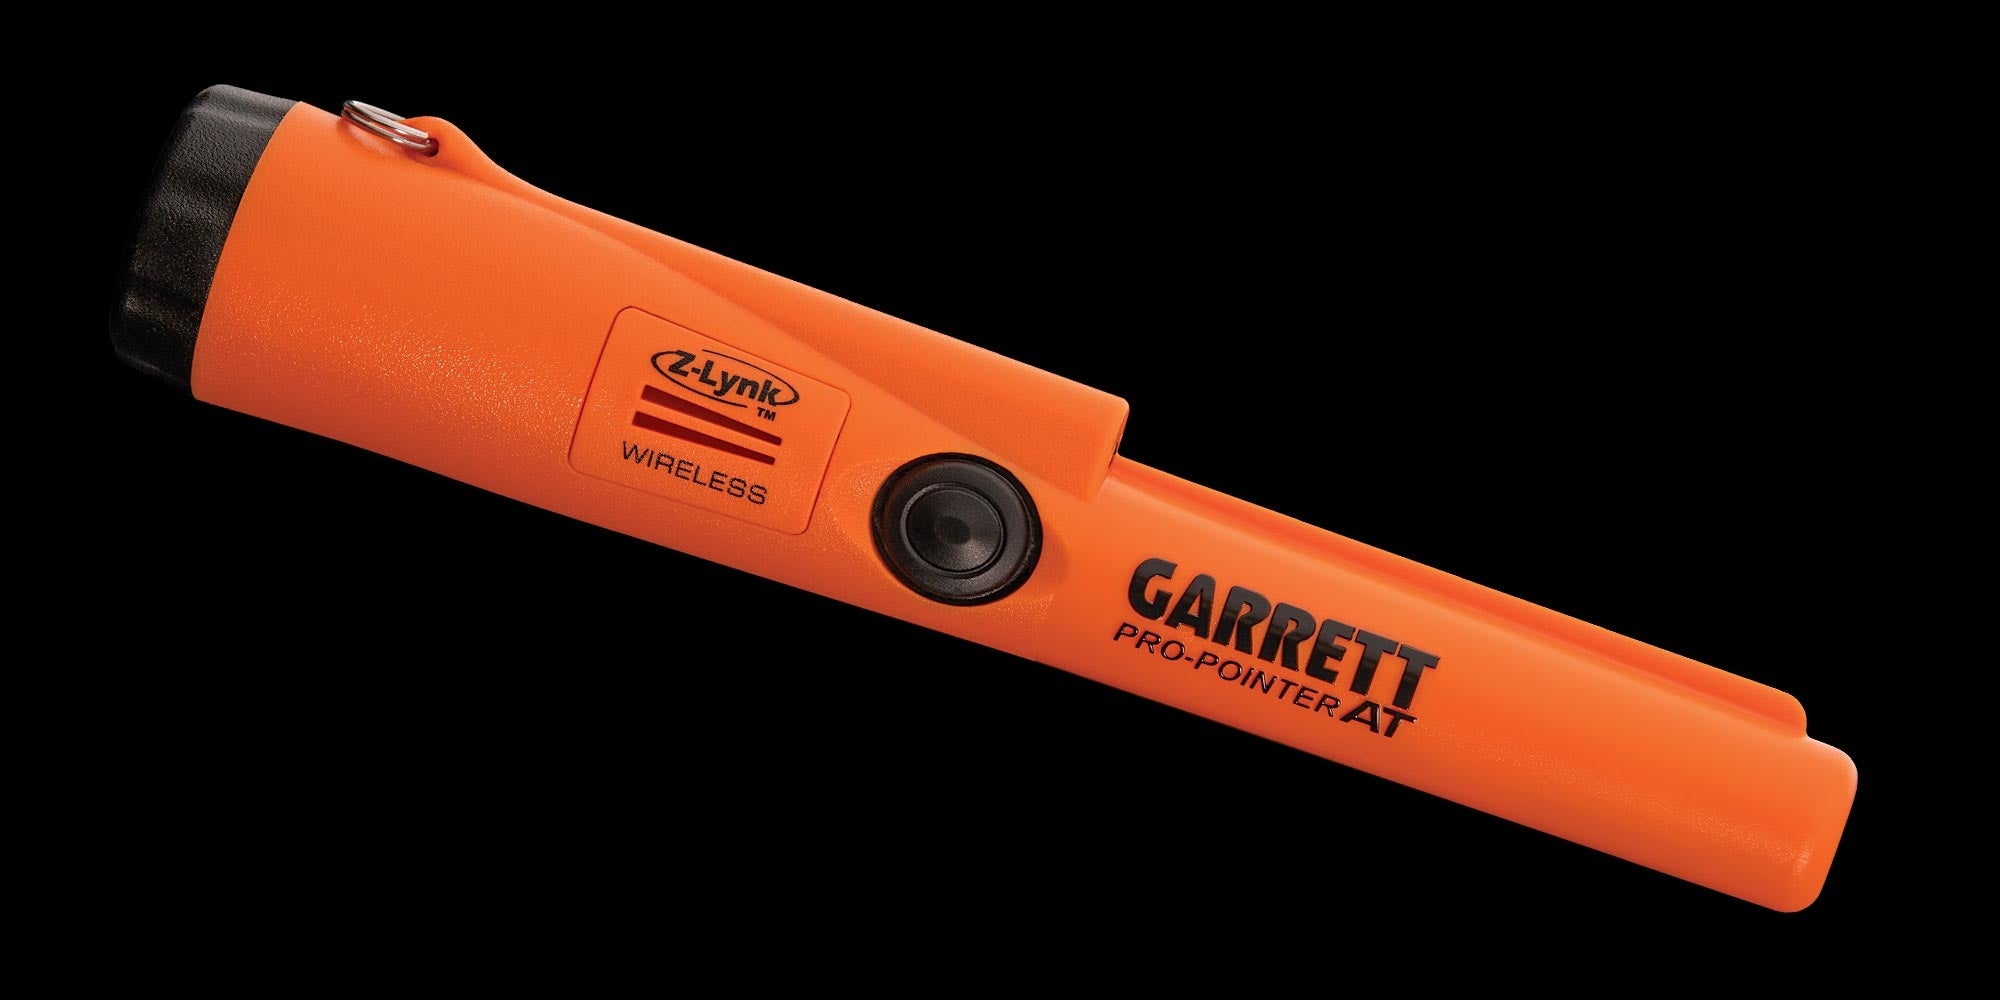 Garrett Pro-Pointer II - Garrett Direct